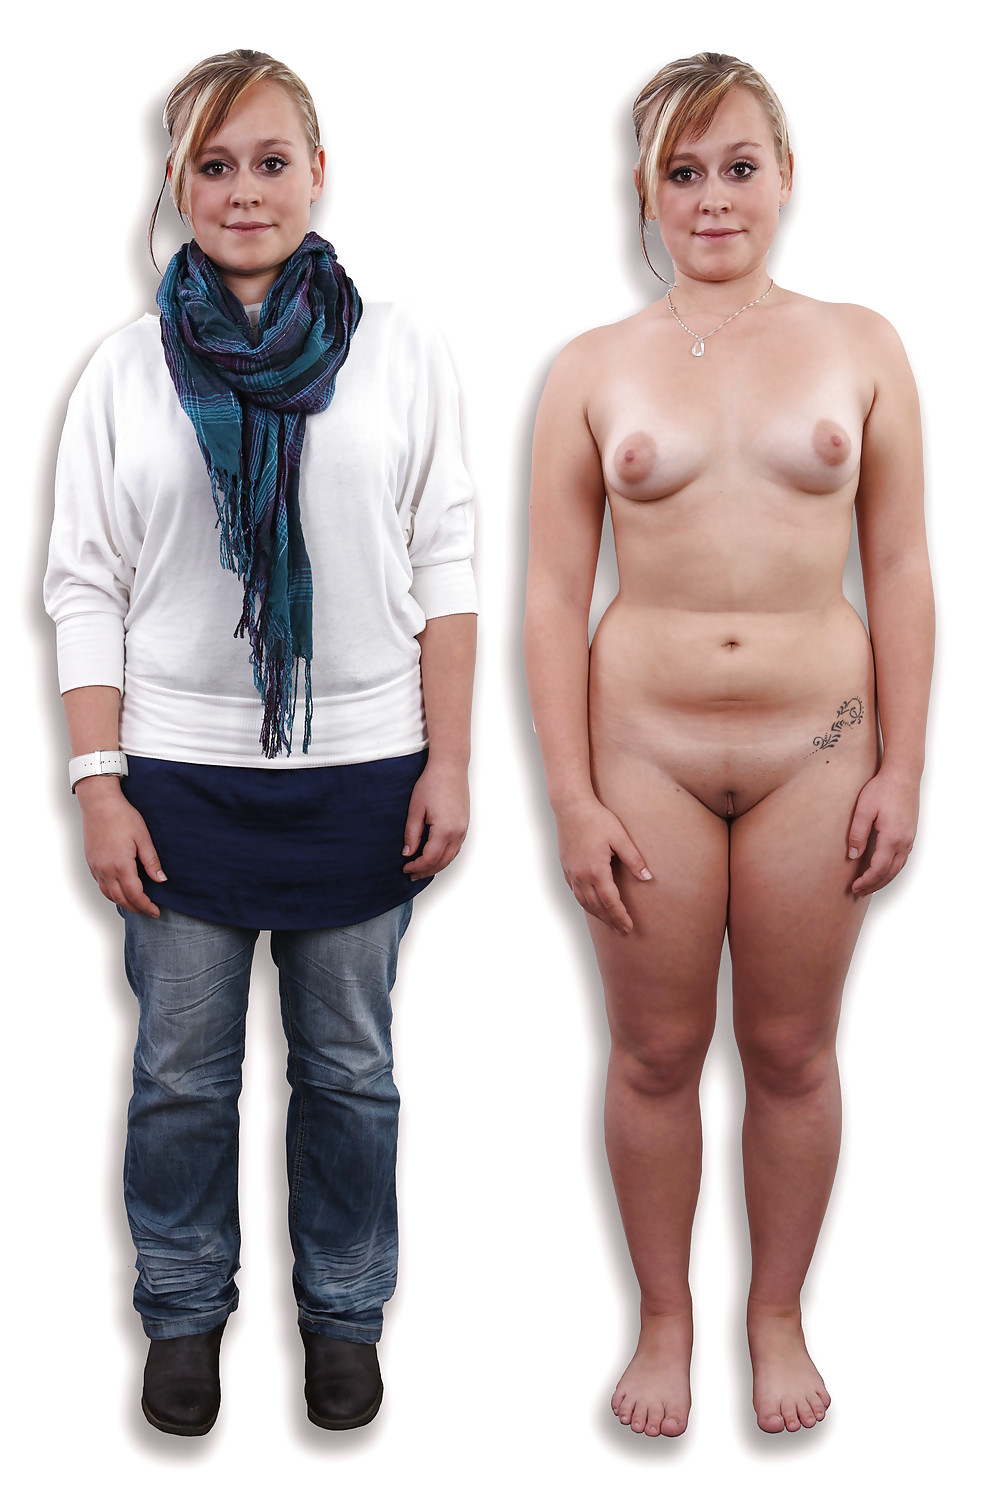 72 Huren aus Tschechien - clothed & nude adult photos